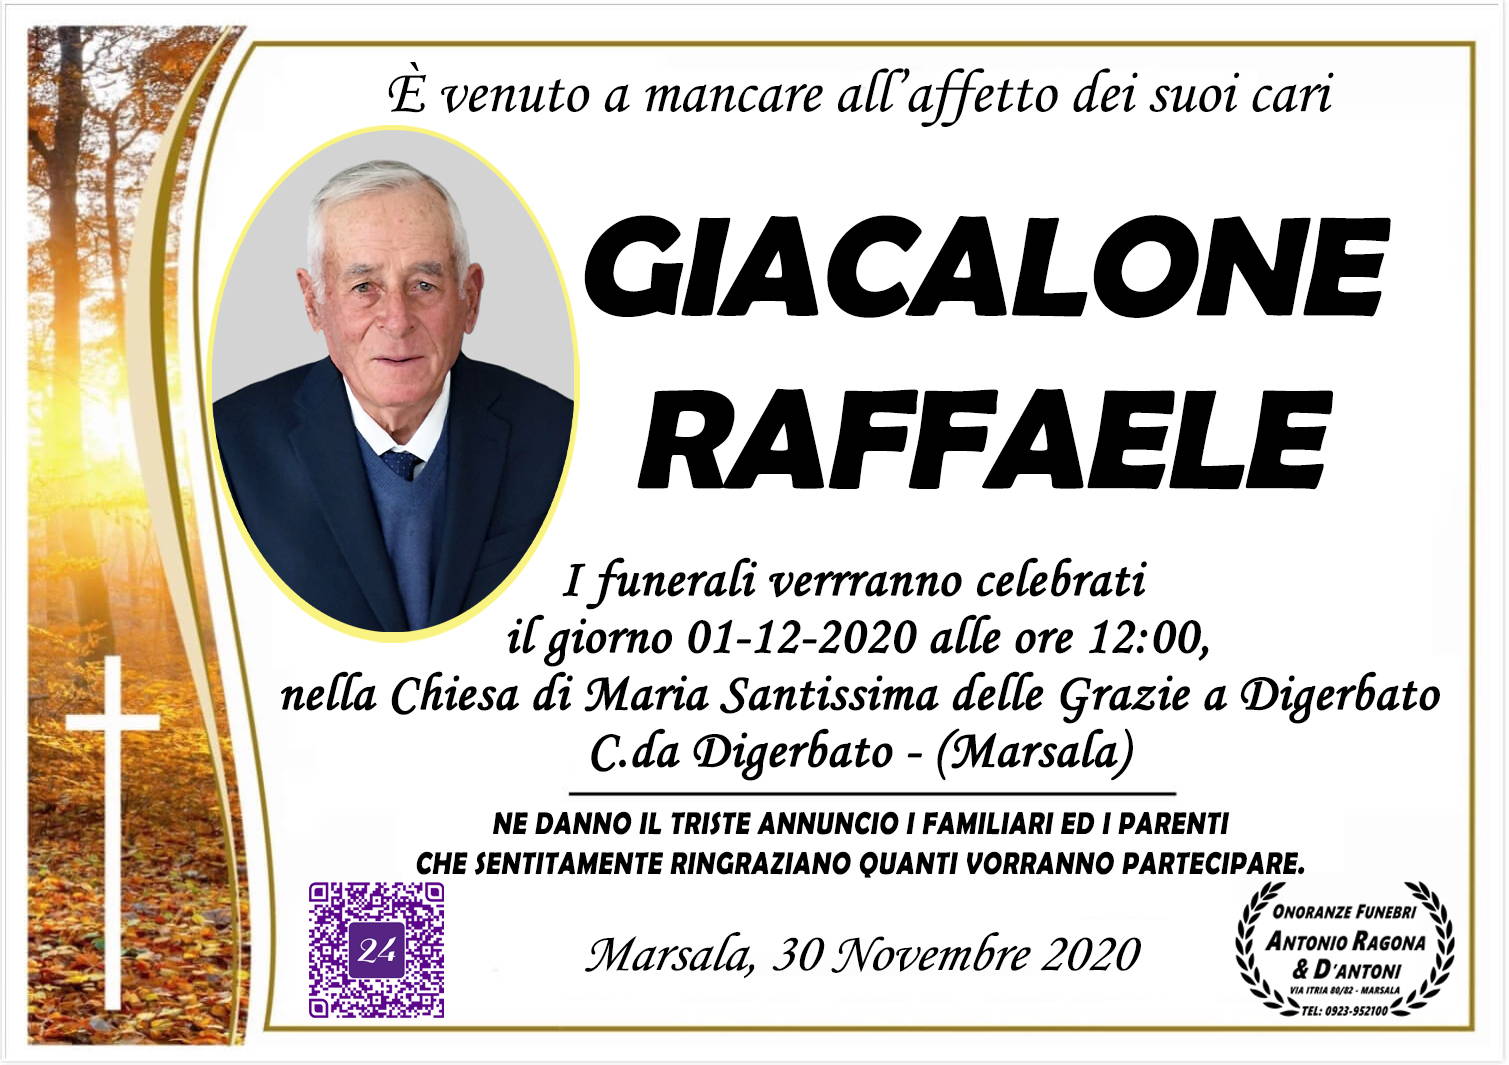 Raffaele Giacalone